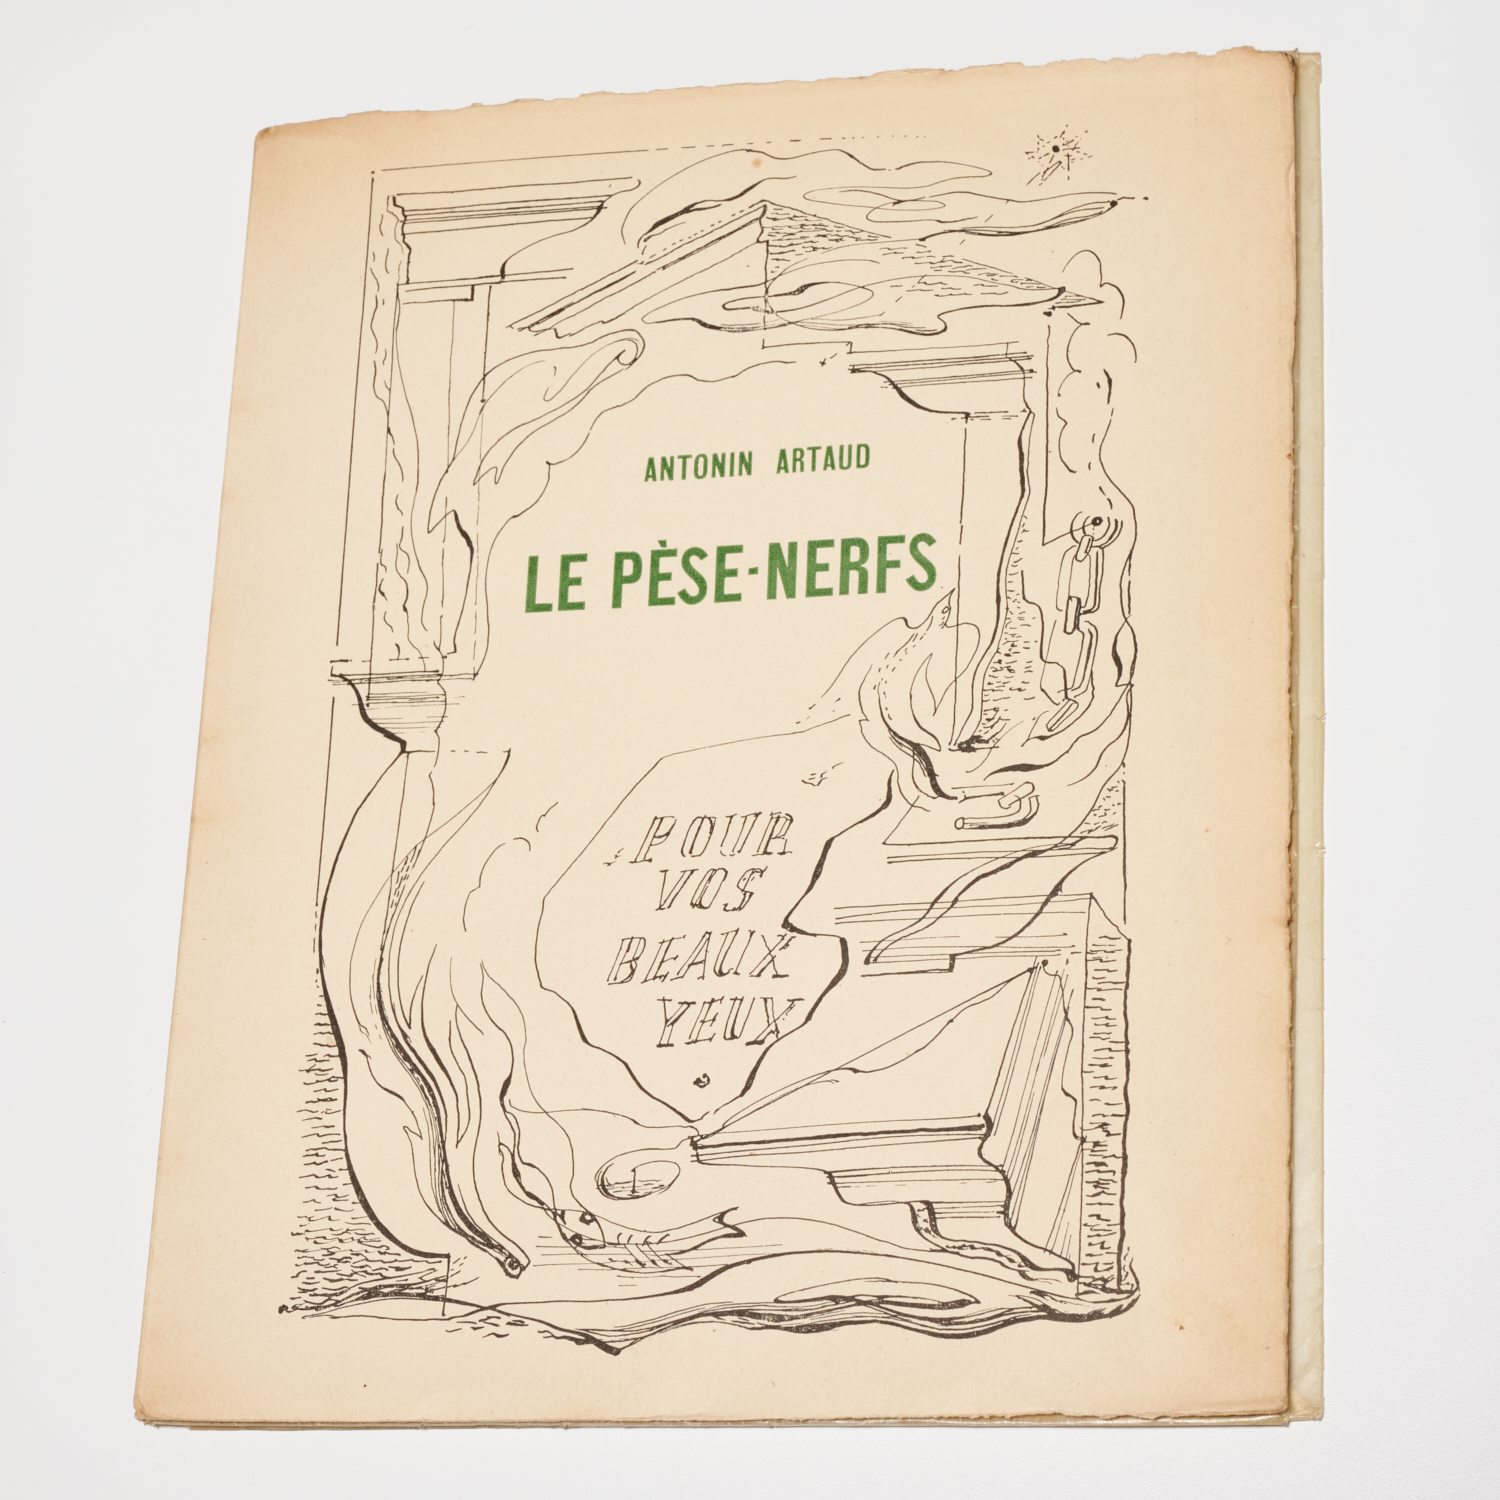 ANTONIN ARTAUD, LE PESE-NERFS, 1925,